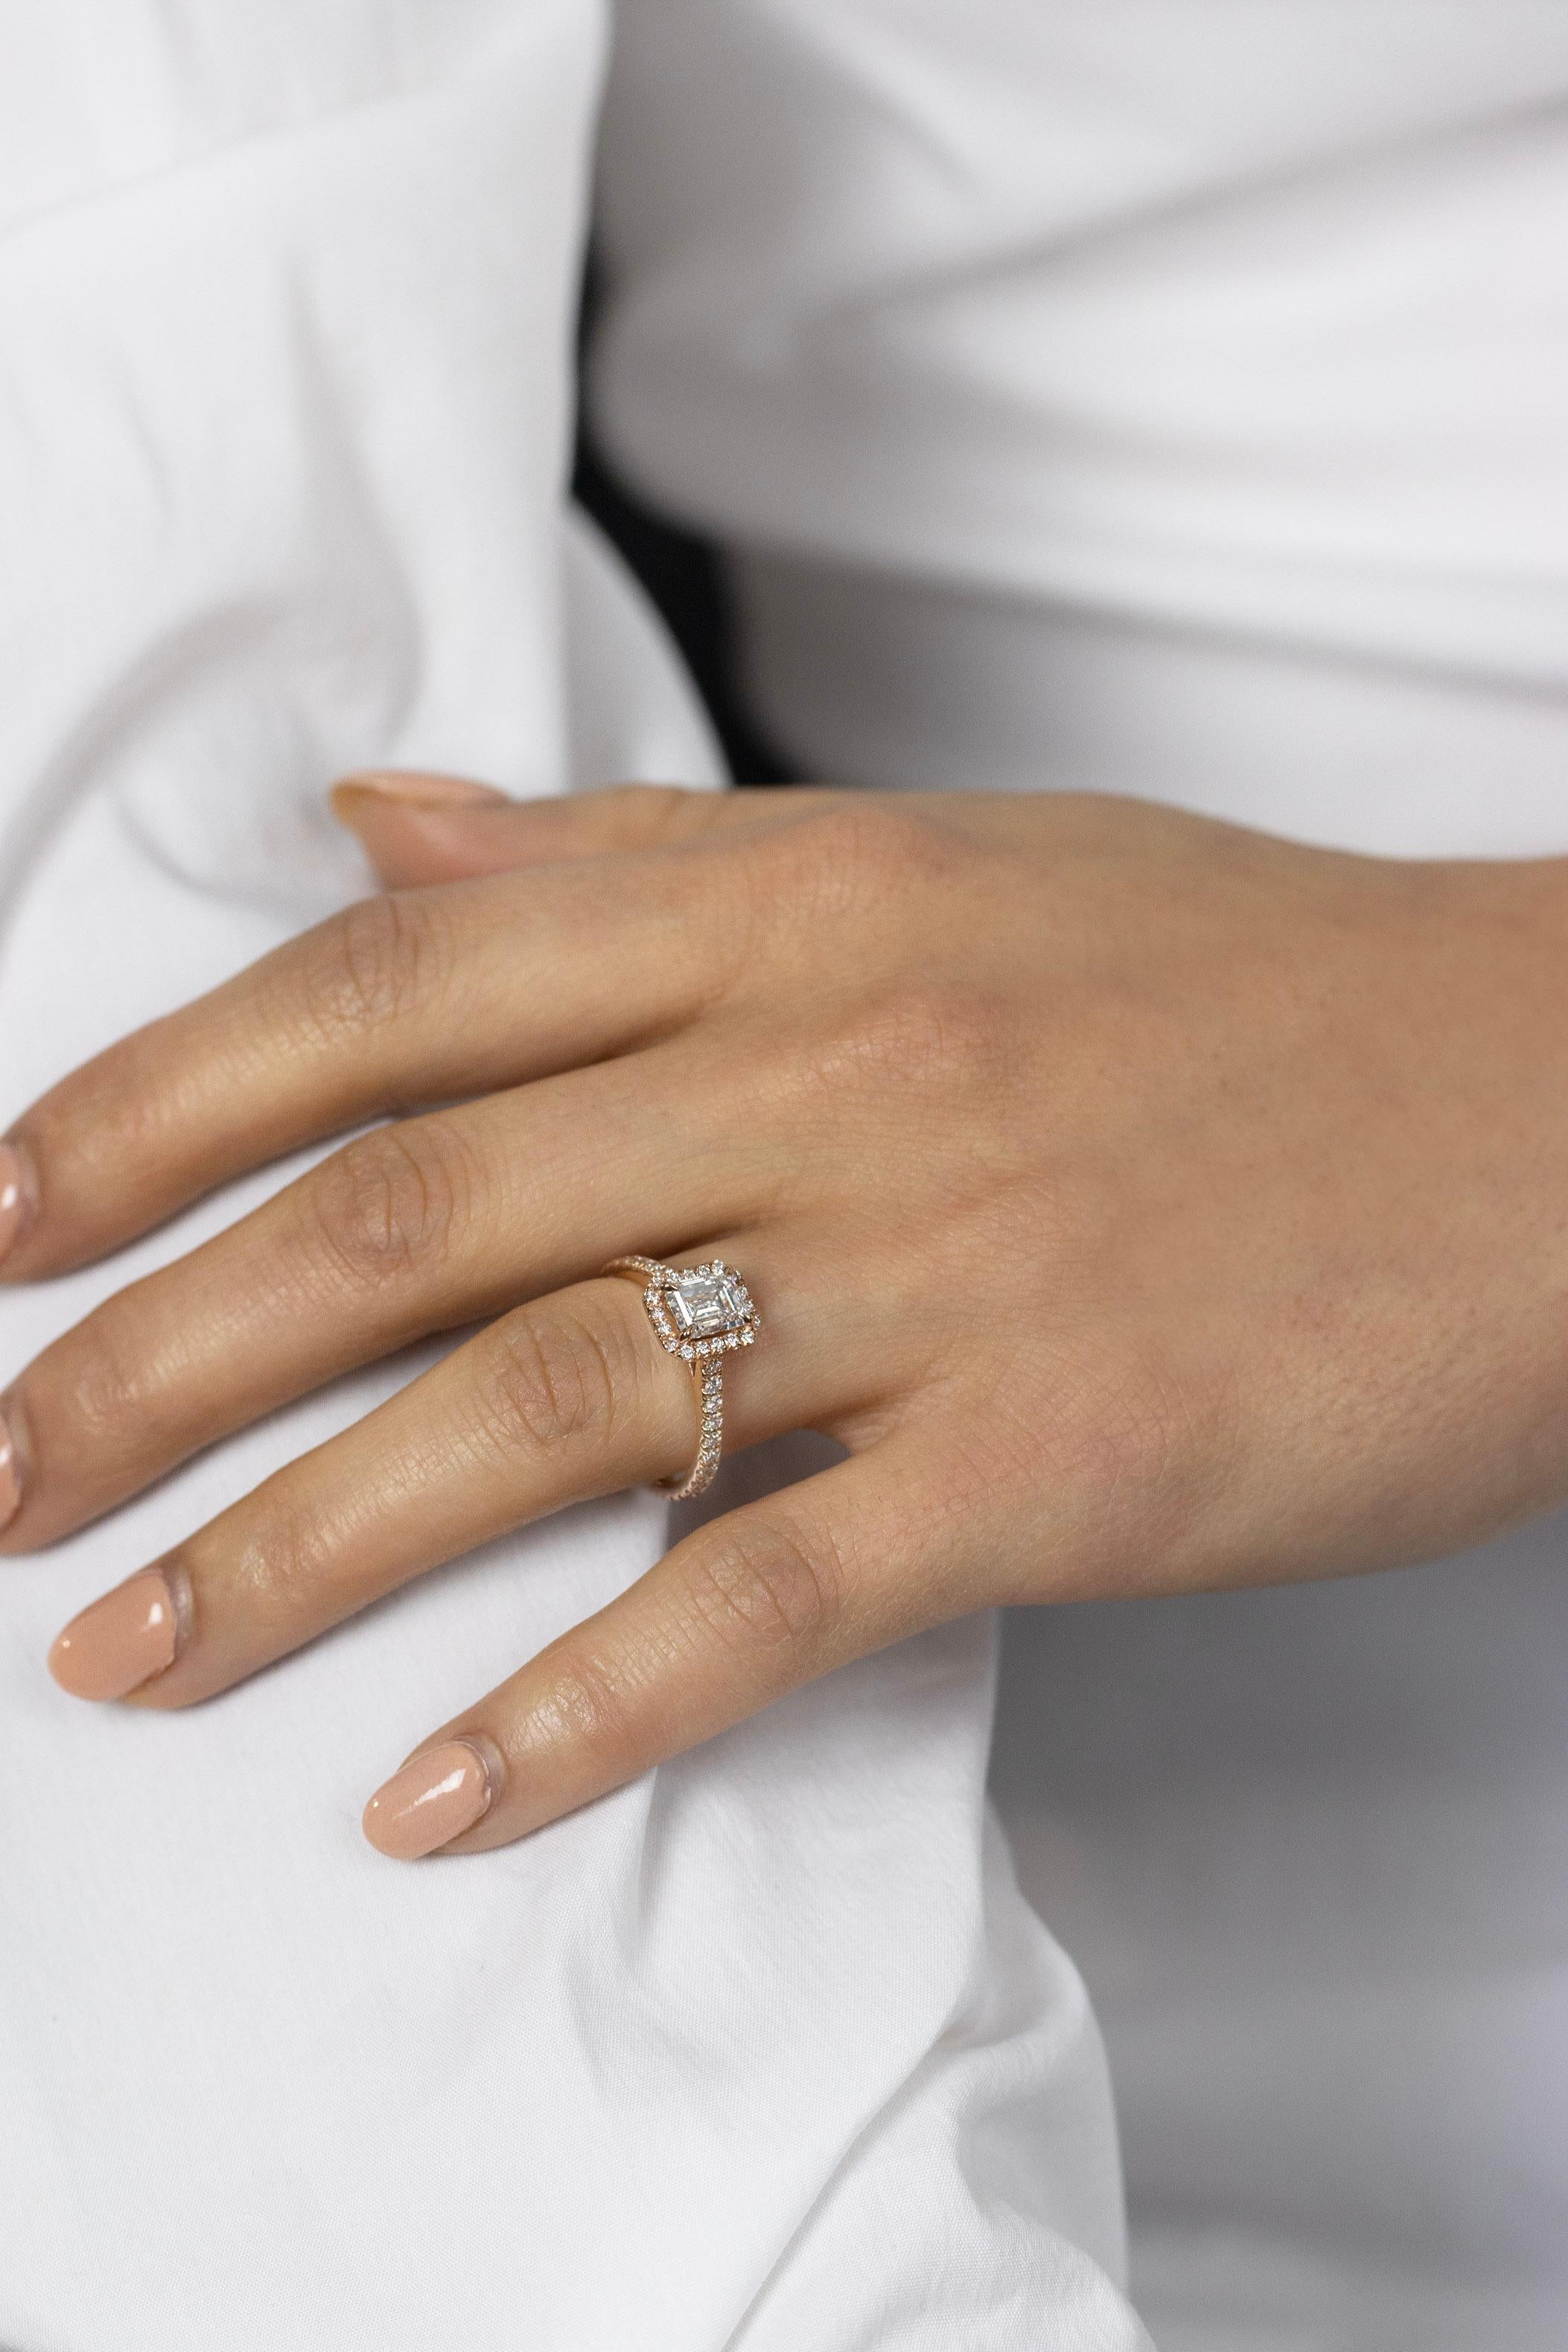 Roman Malakov GIA Certified 1.01 Carats Emerald Cut Diamond Halo Engagement Ring For Sale 1